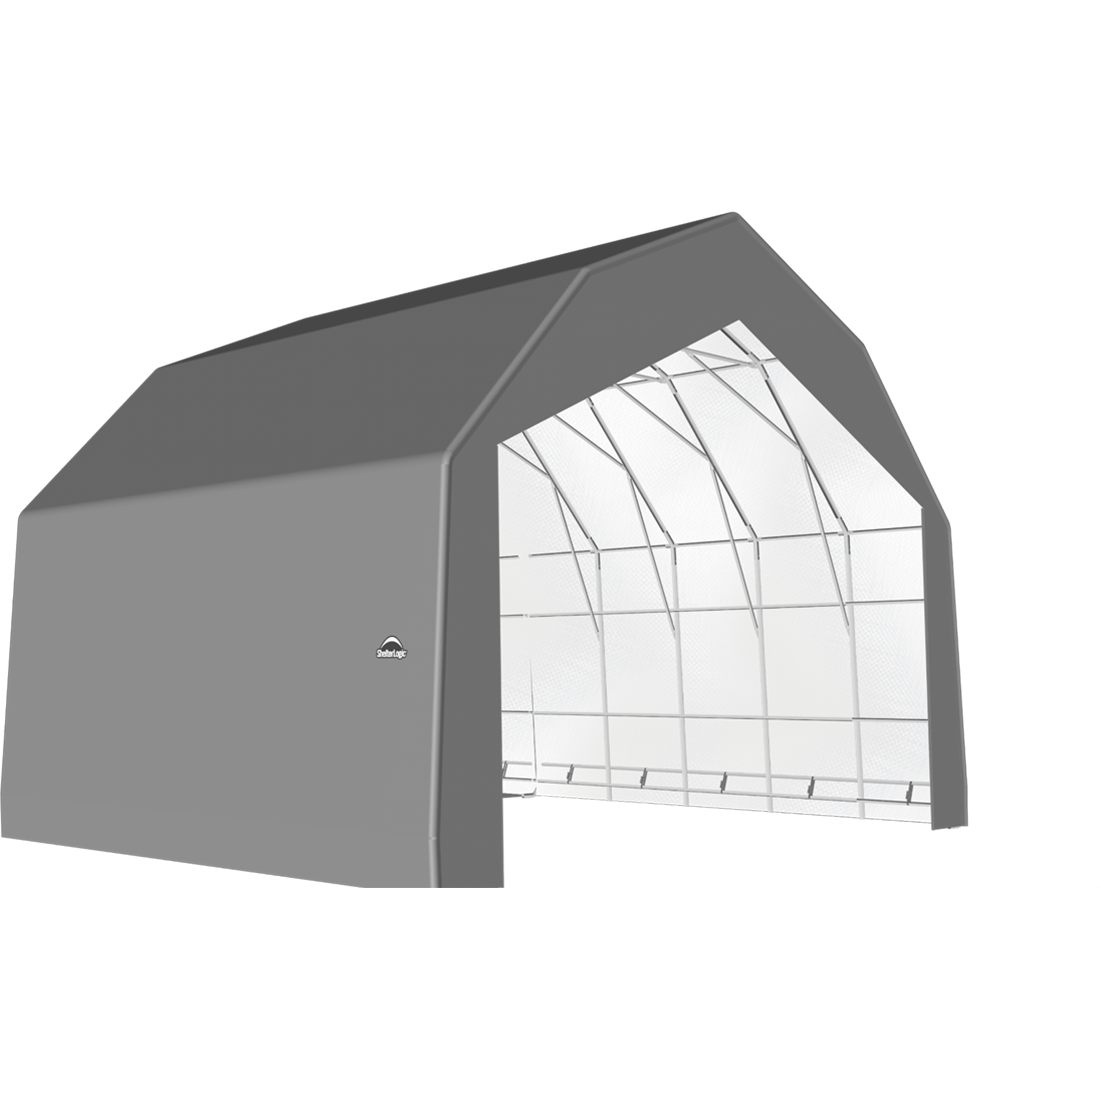 ShelterTech SP Series Barn Shelter, 30 ft. x 20 ft. x 21 ft. Heavy Duty PVC 14.5 oz. Gray